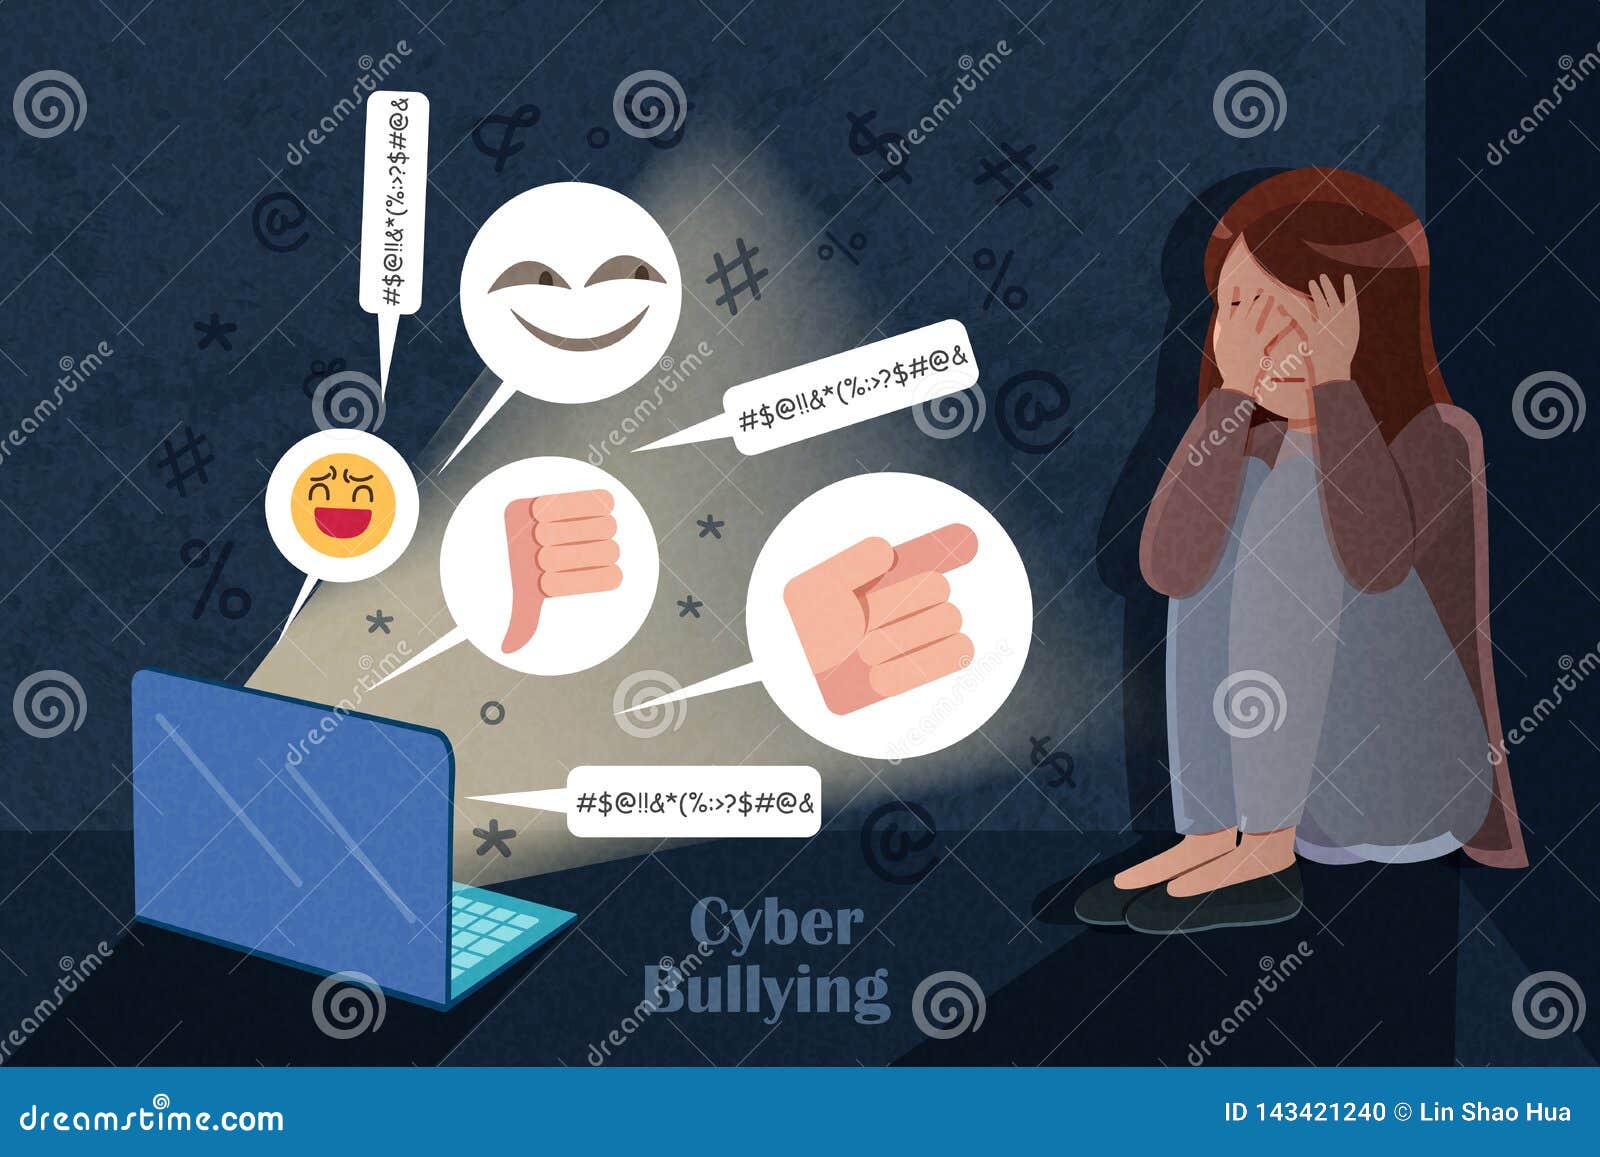 Sad Girl Getting Cyber Bullying Vector Illustration | CartoonDealer.com ...